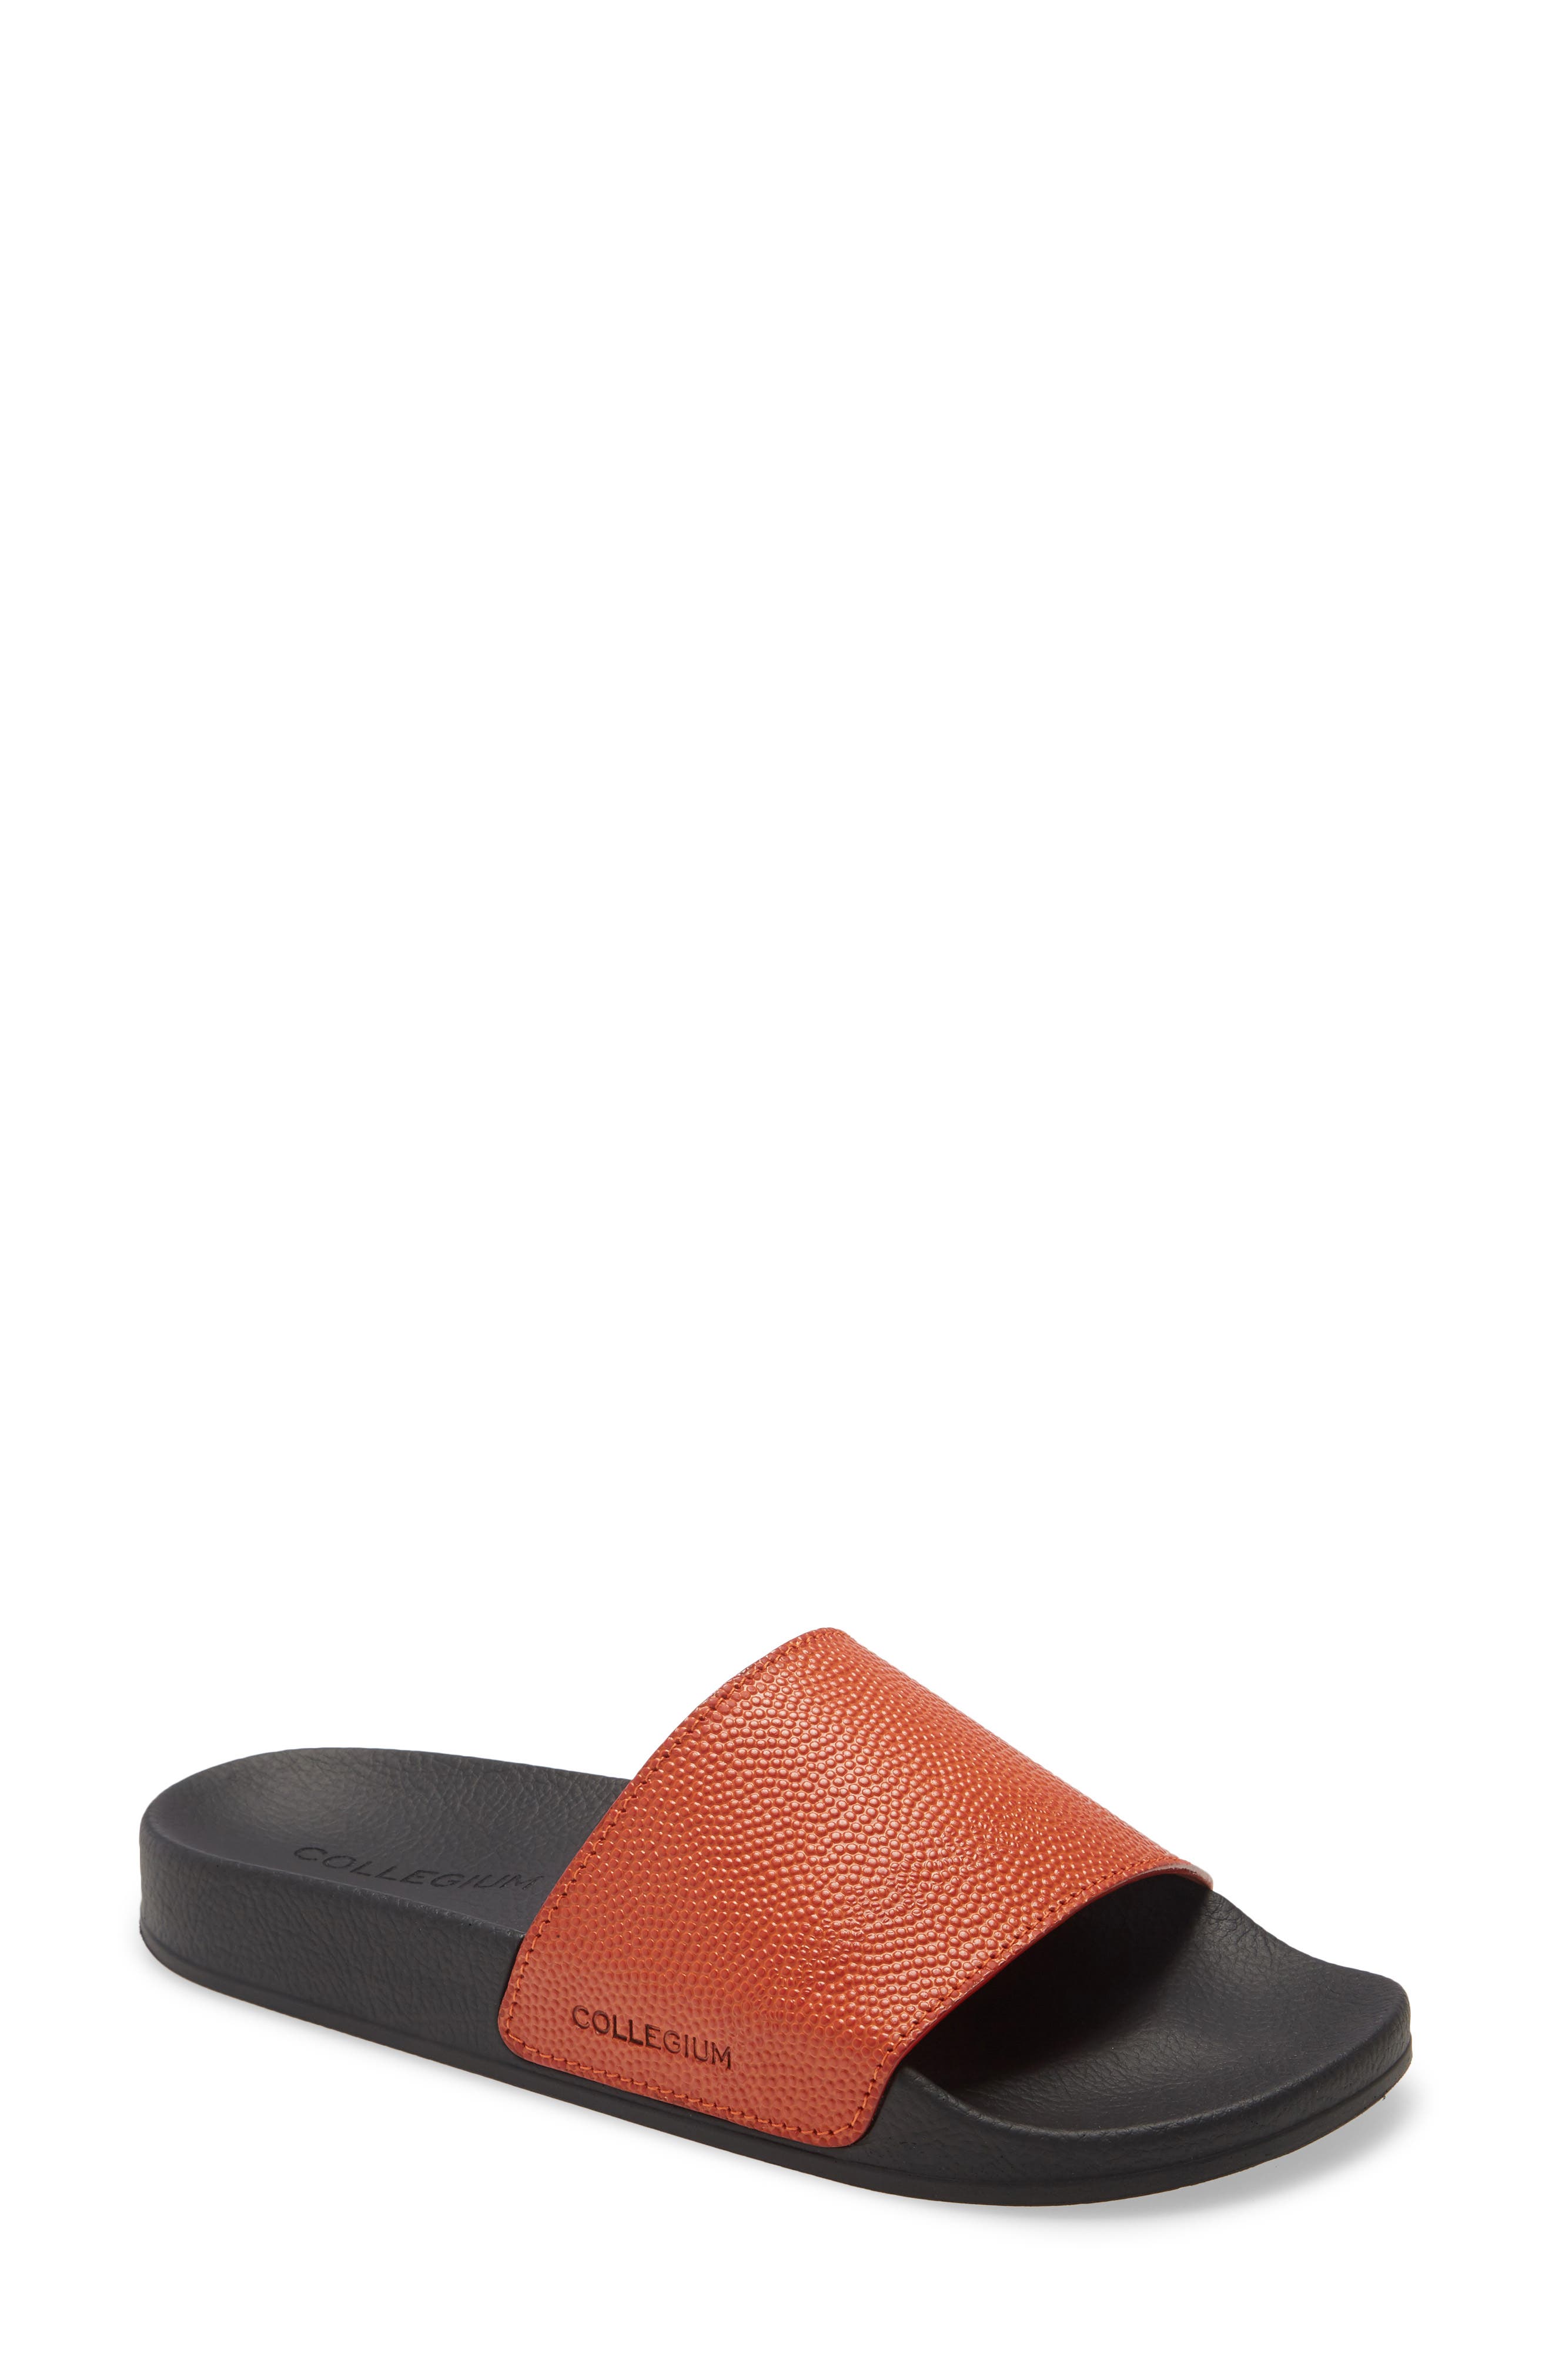 clarks santa rock sandals orange